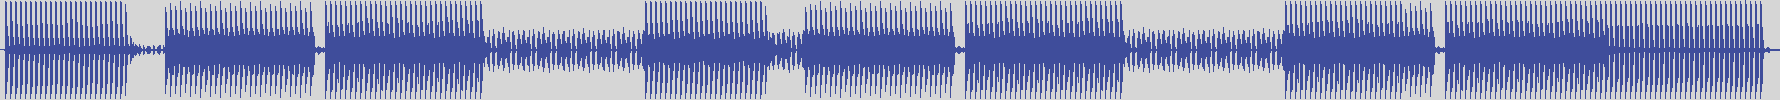 nf_boyz_records [NFY074] Pasqualini Gotti - Demisexual [Original Mix] audio wave form